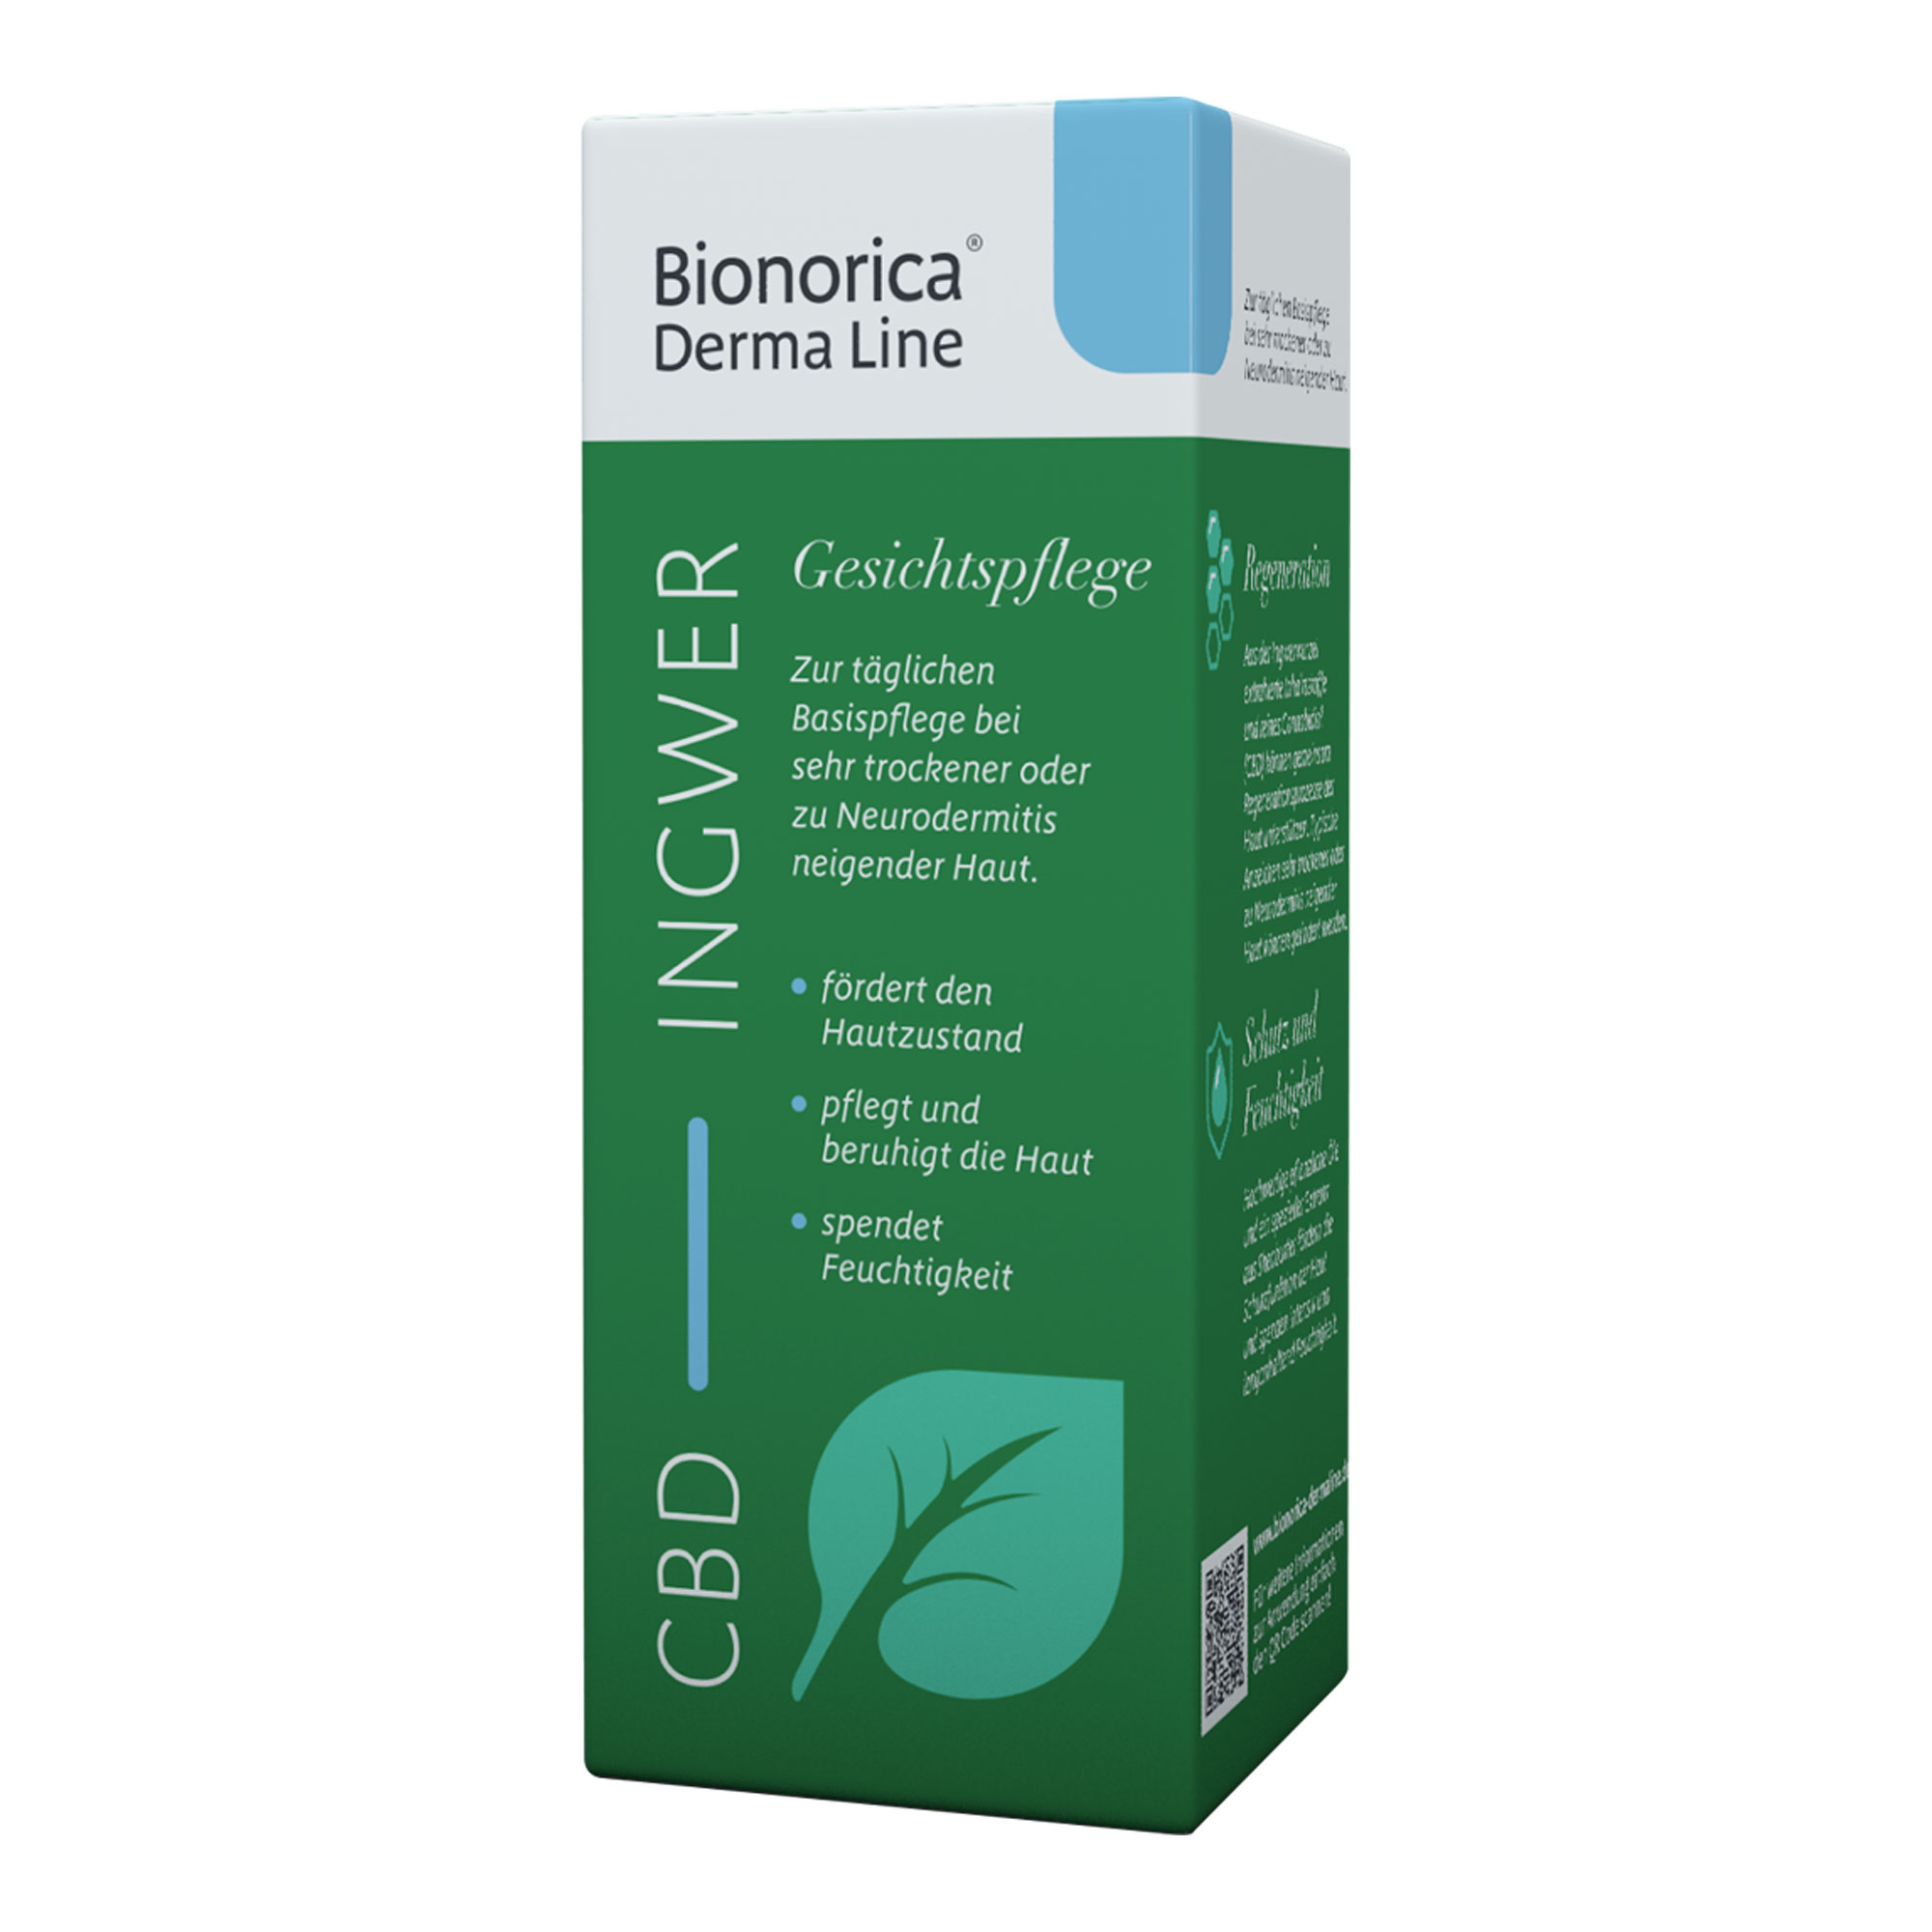 Bionorica Derma Line Ingwer-CBD Gesichtscreme Verpackung